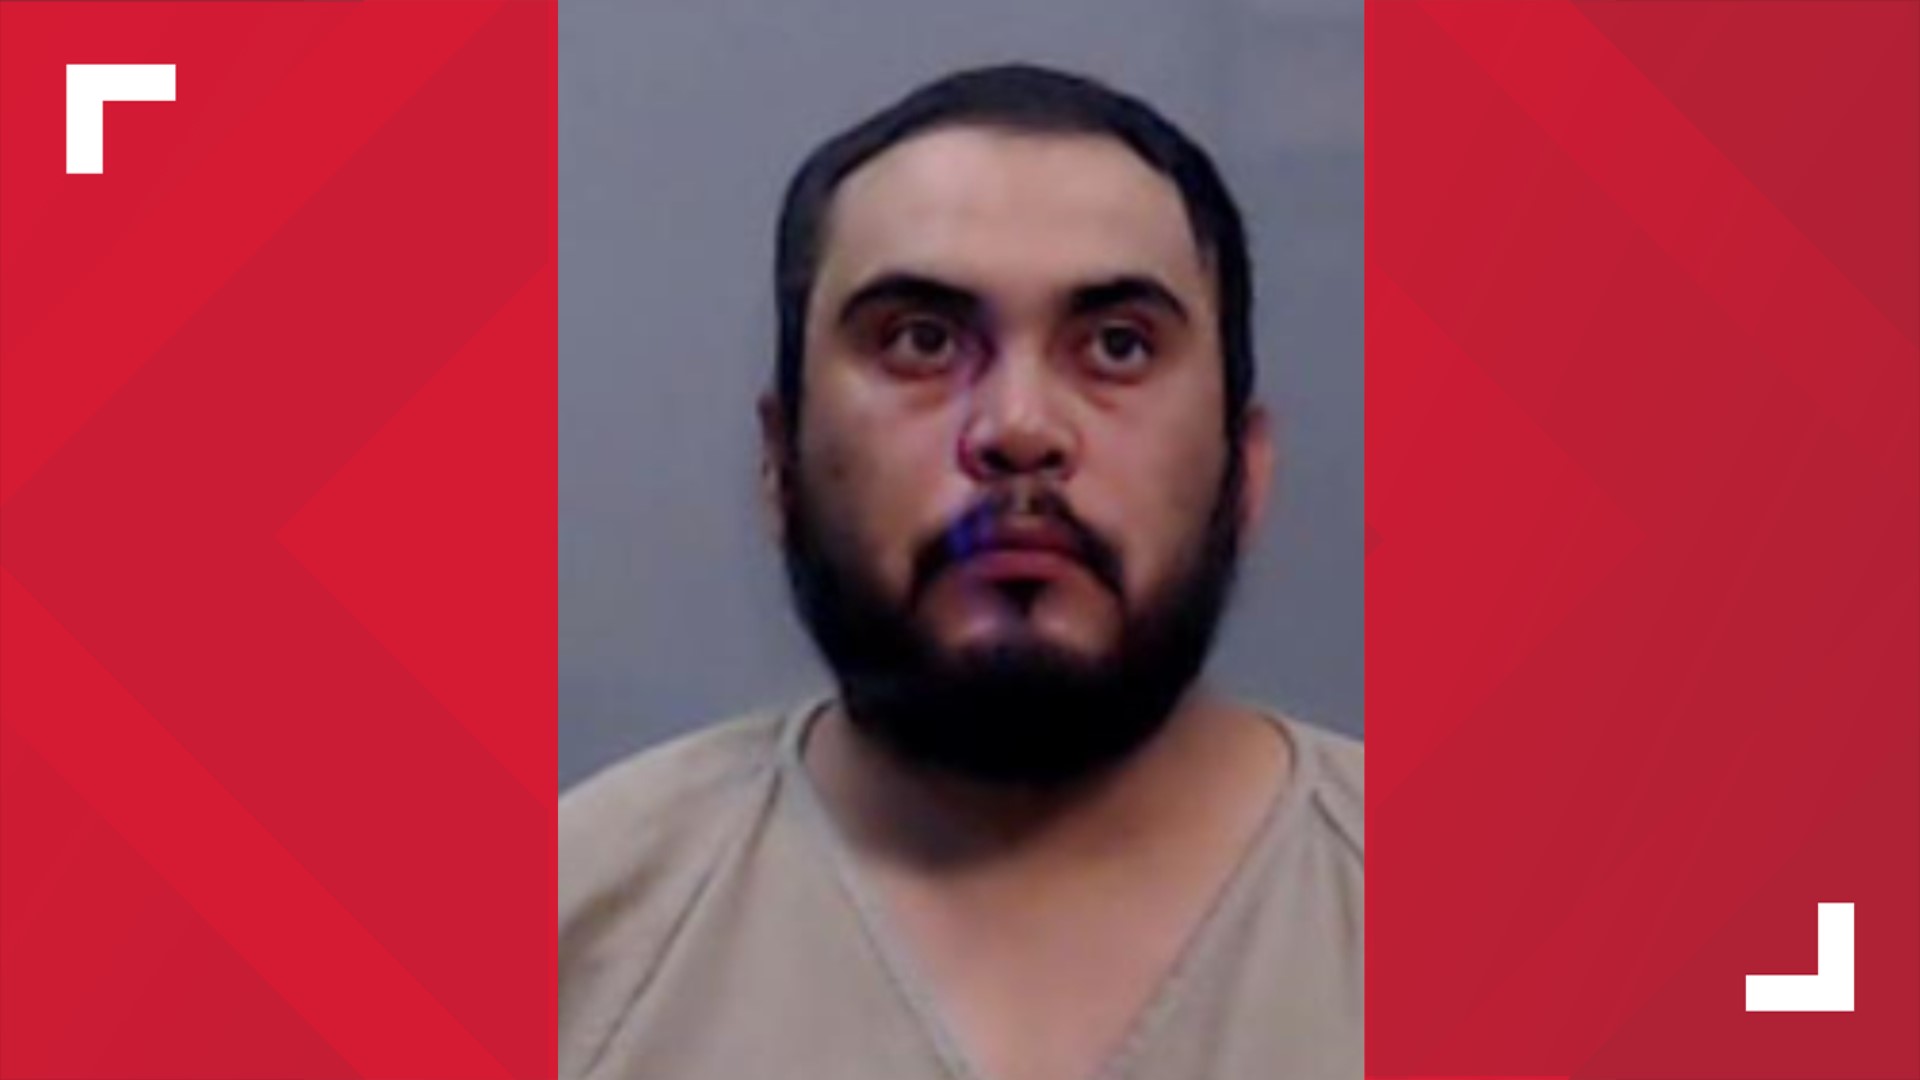 Mario Lopez-Valdez, 30, was arrested for intoxication manslaughter.